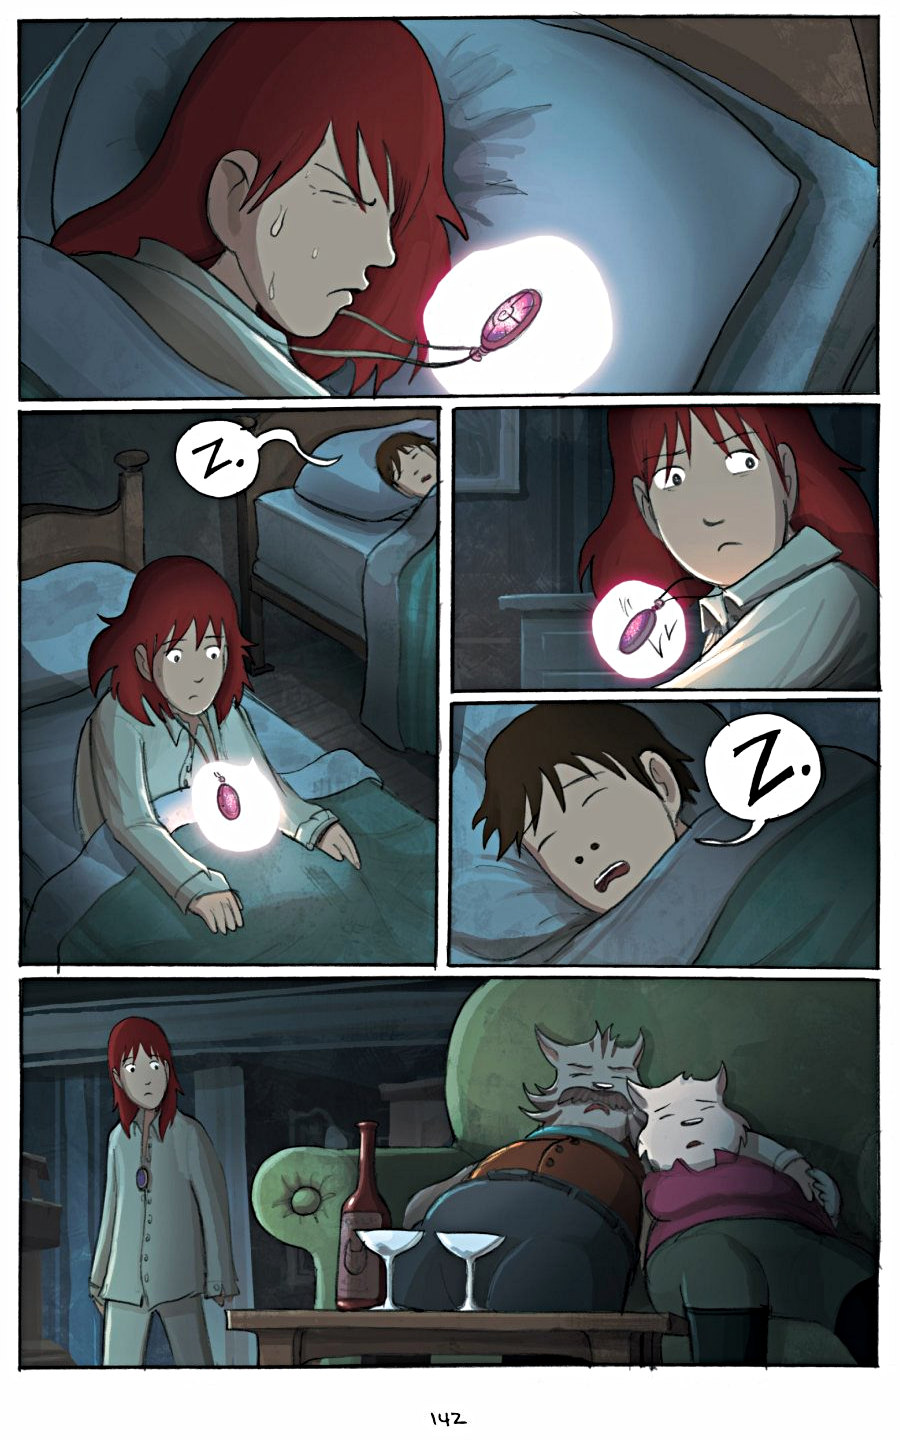 page 142 of amulet 3 cloud searchers graphic novel by kazu kibuishi